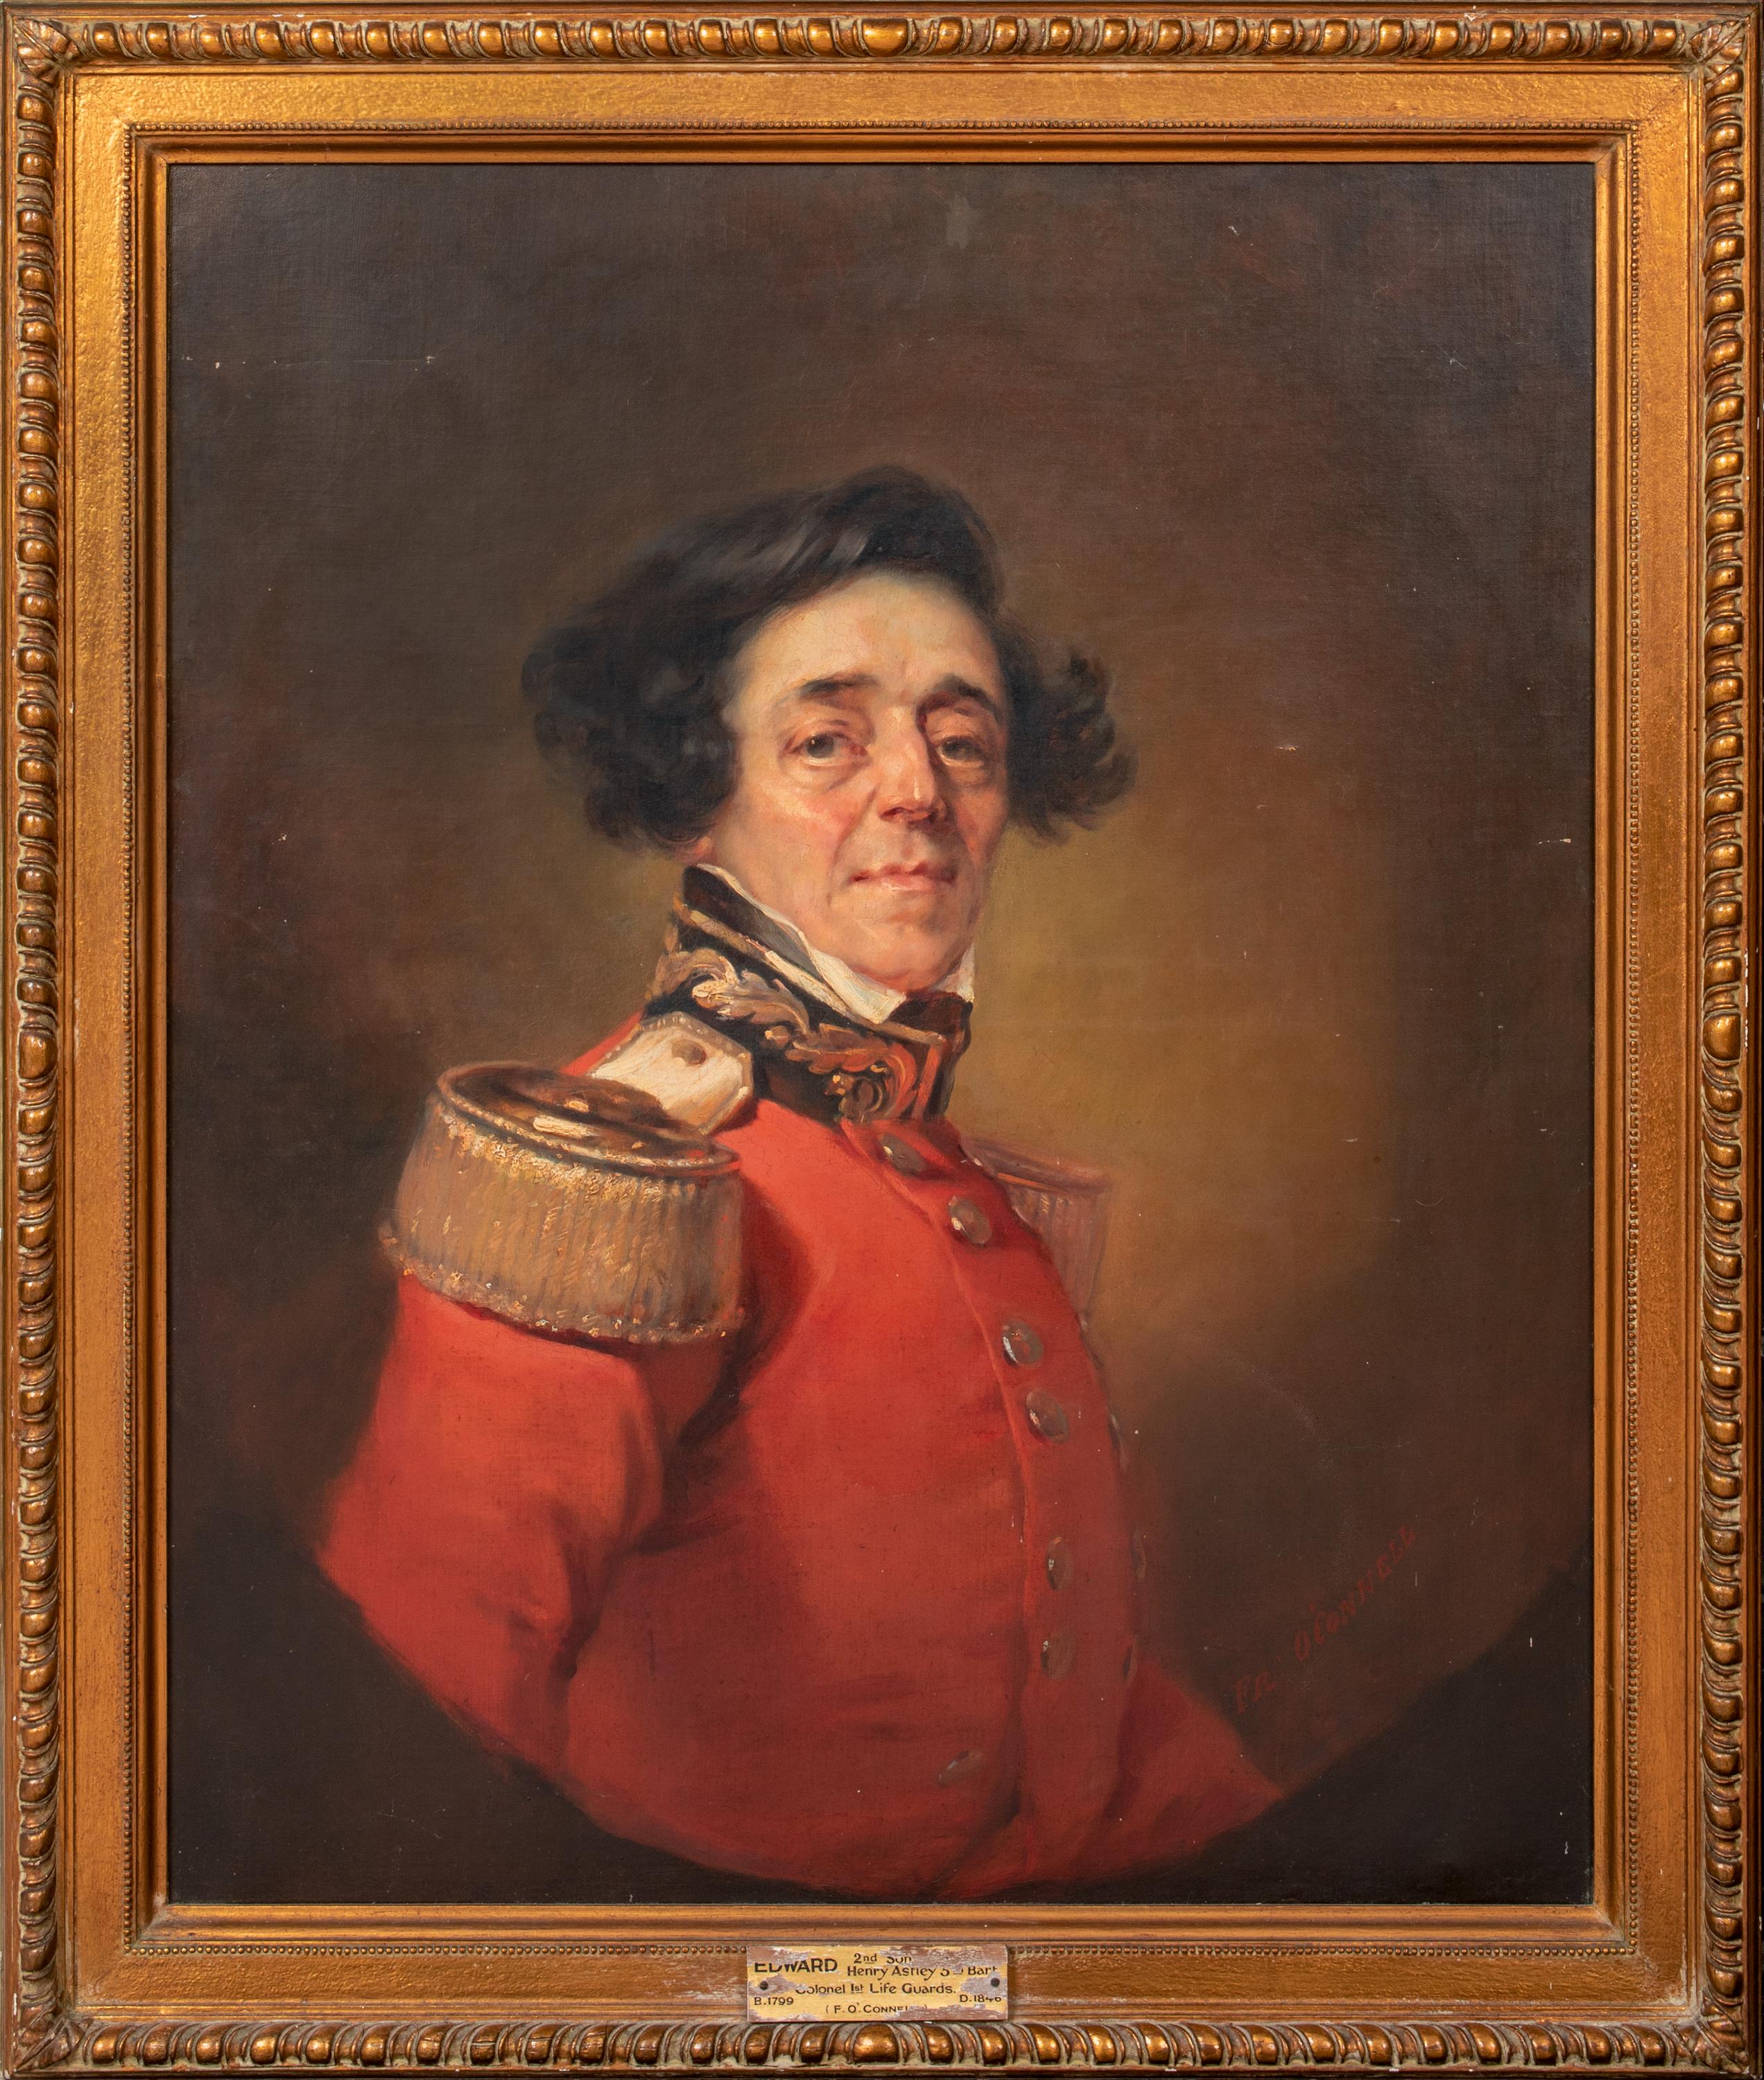 Unknown Portrait Painting - Portrait Colonel Edward Astley 1st Royal Life Guards, 19th Century   